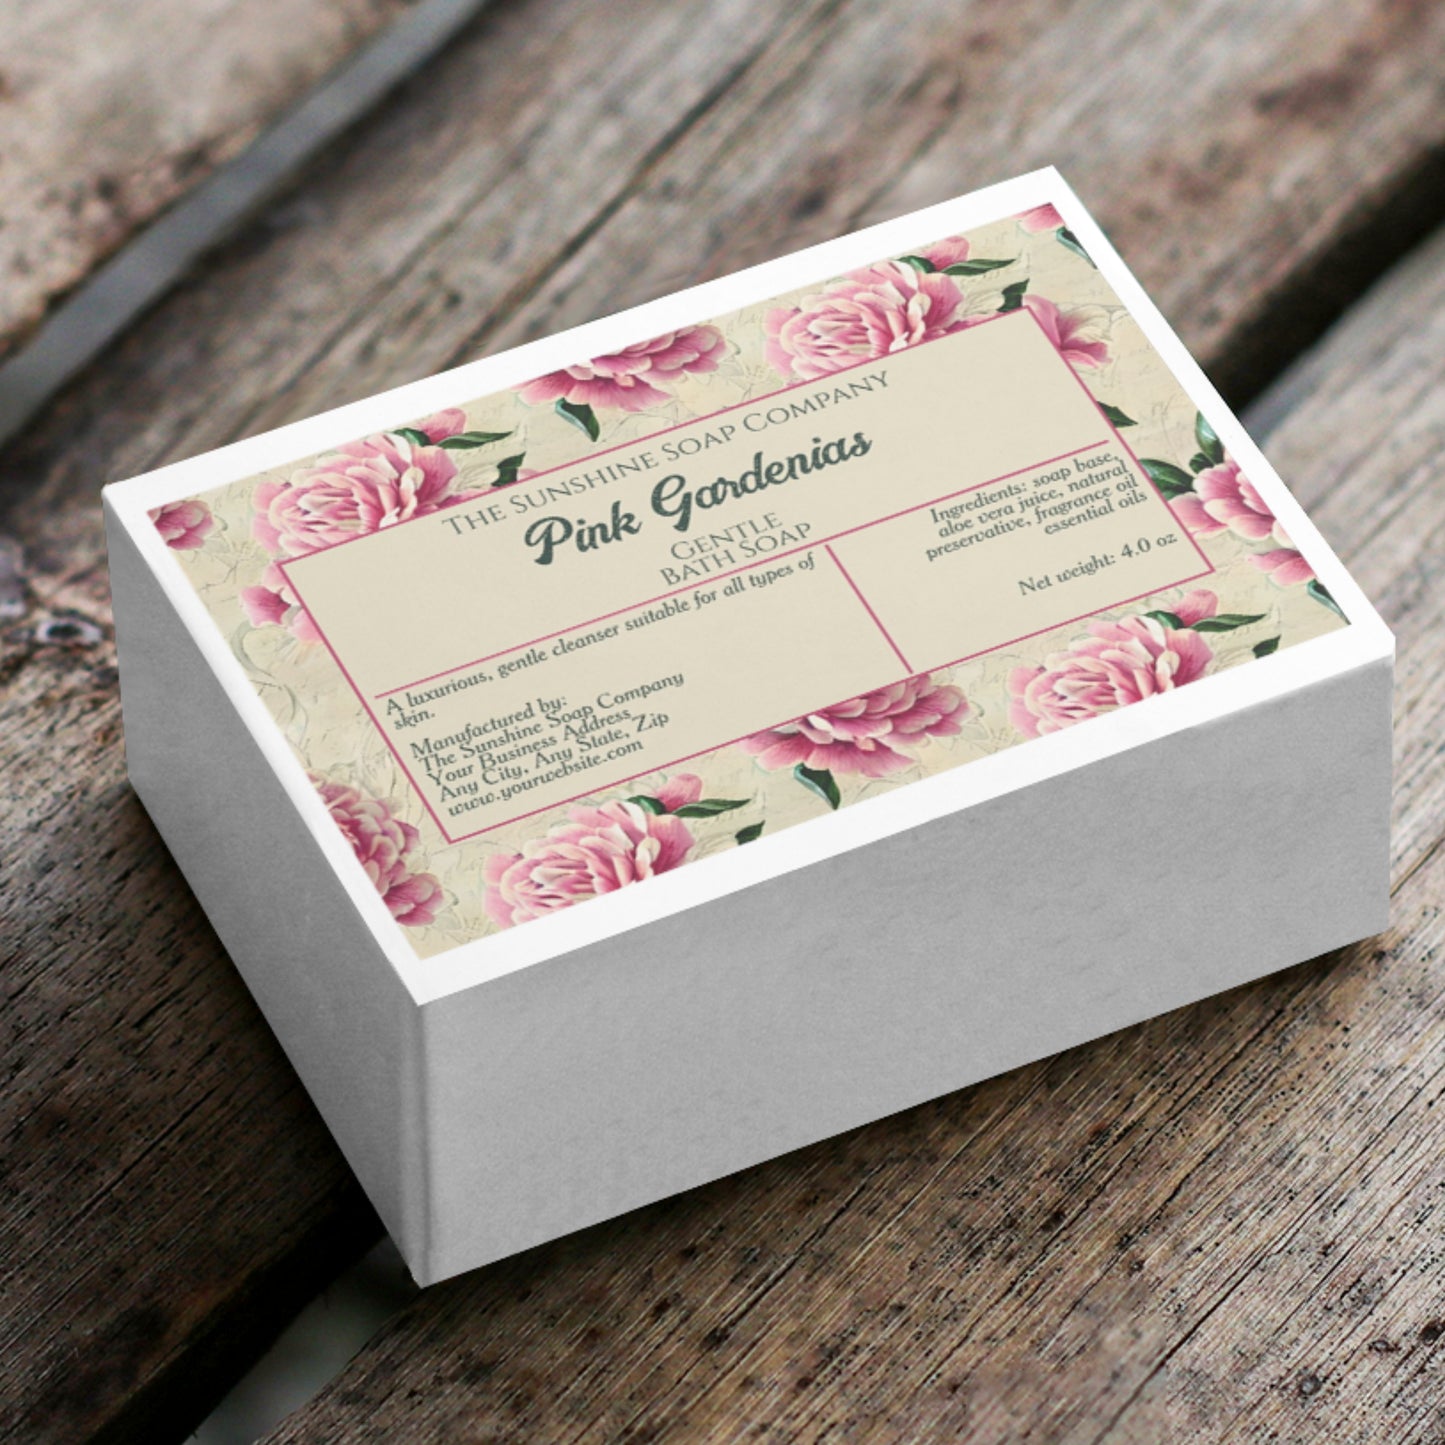 Waterproof Pink Gardenias Soap Label